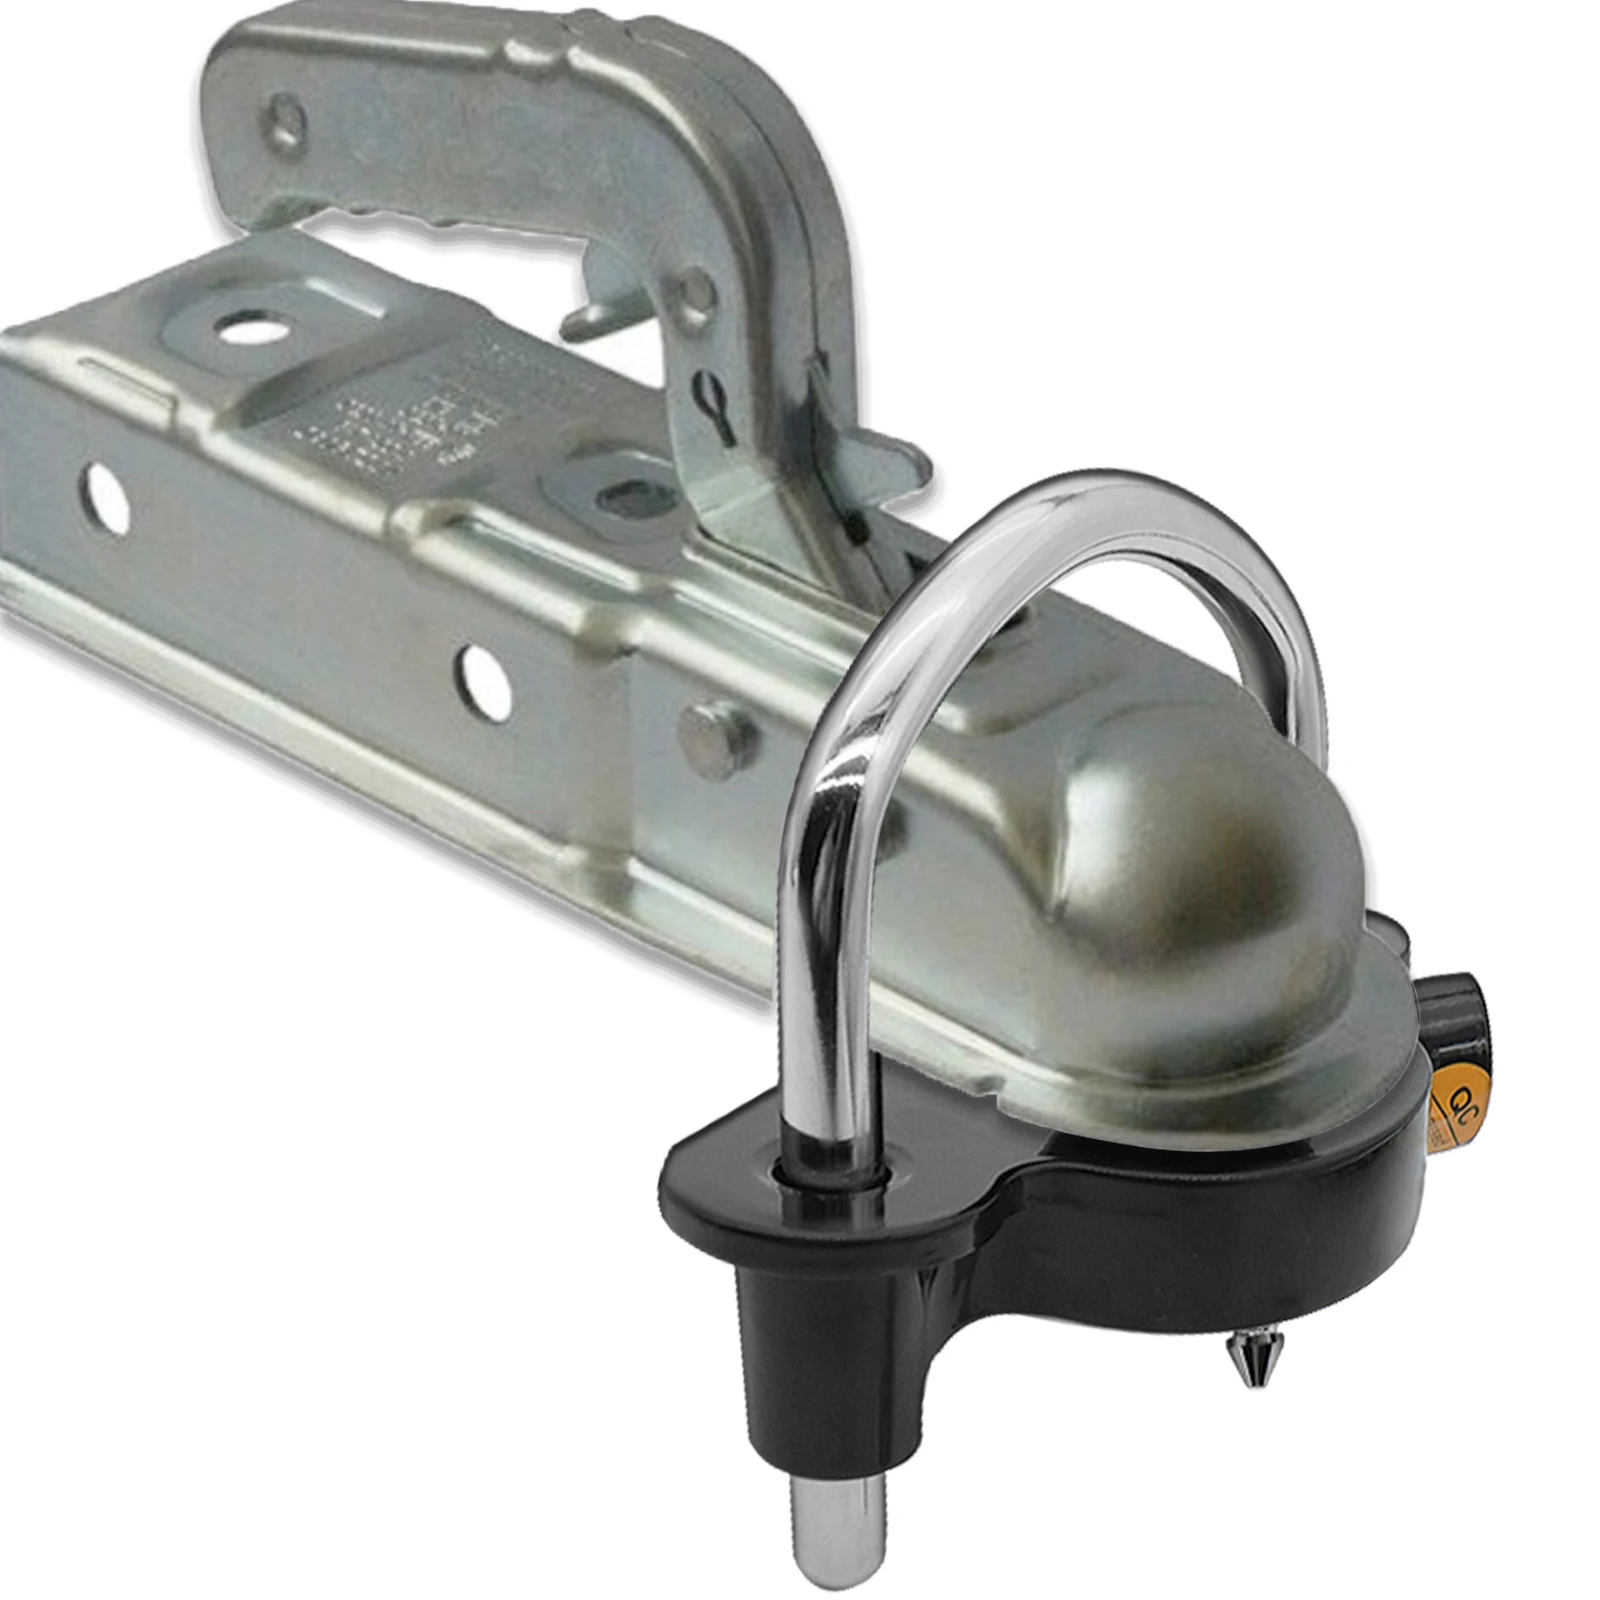 Heavy-Duty Hook Lock Universal Caravan Accessories Trailer Ball Coupler Safe Security Anti-Theft Lock images - 6